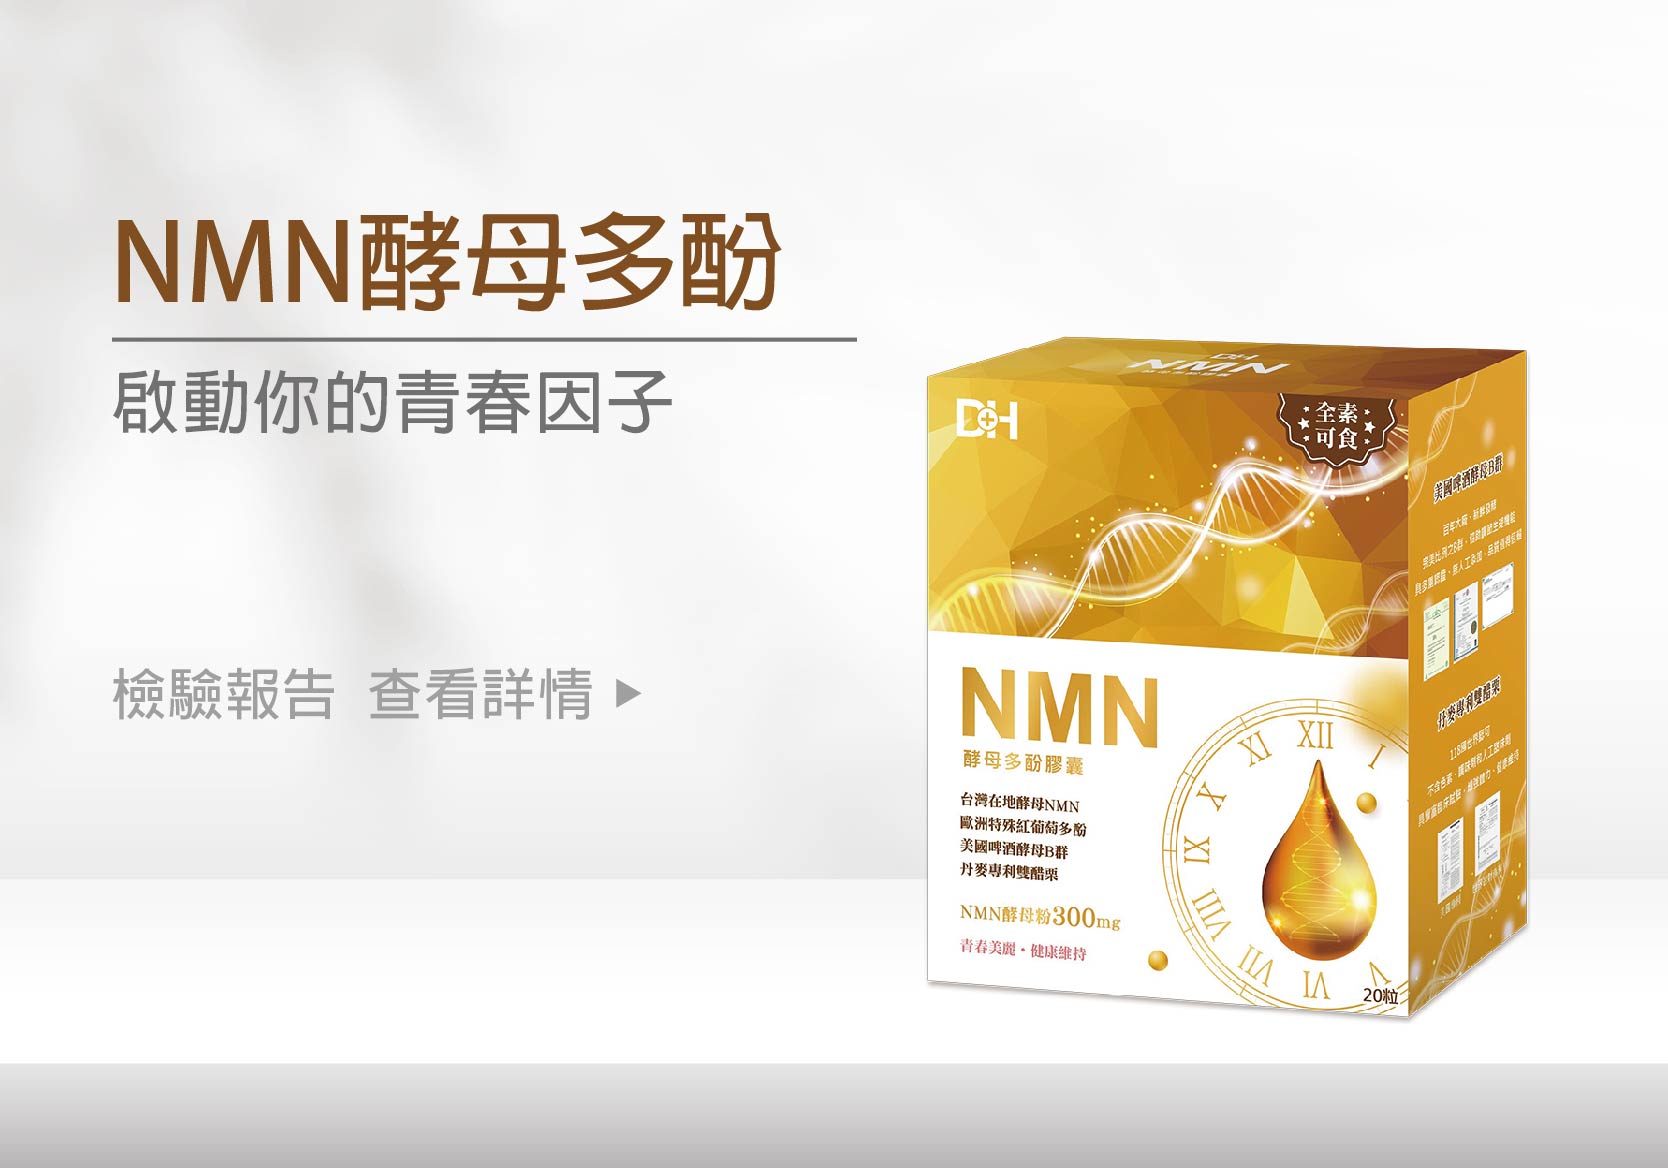 DH恆隆生技/NMN酵母多酚/台灣少數合法/天然來源/NMN含量高達300mg/全素/重啟青春/喚醒最好的自己/產品檢驗/無重金屬/不含西藥/塑化劑、微生物報告均安全通過